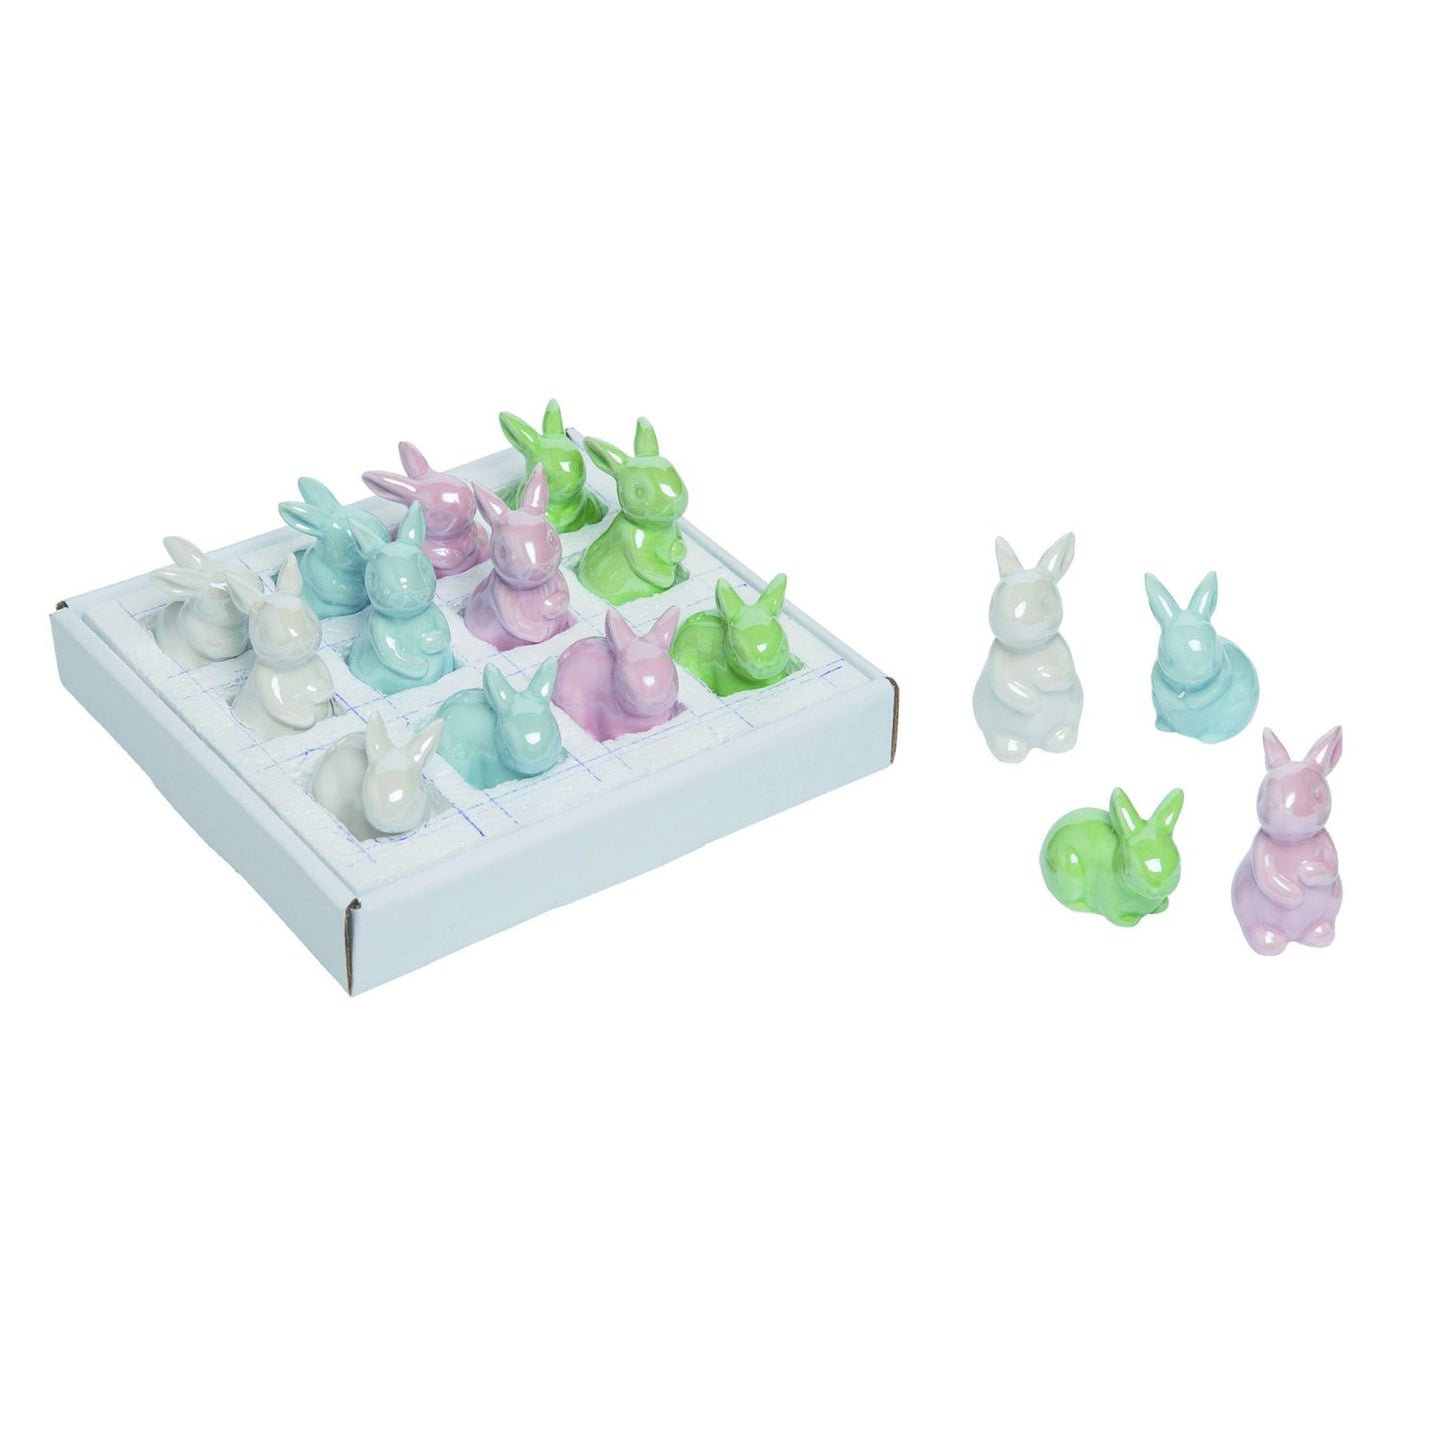 Transpac Dolomite Mini Bunny Figurines, Set Of 12.